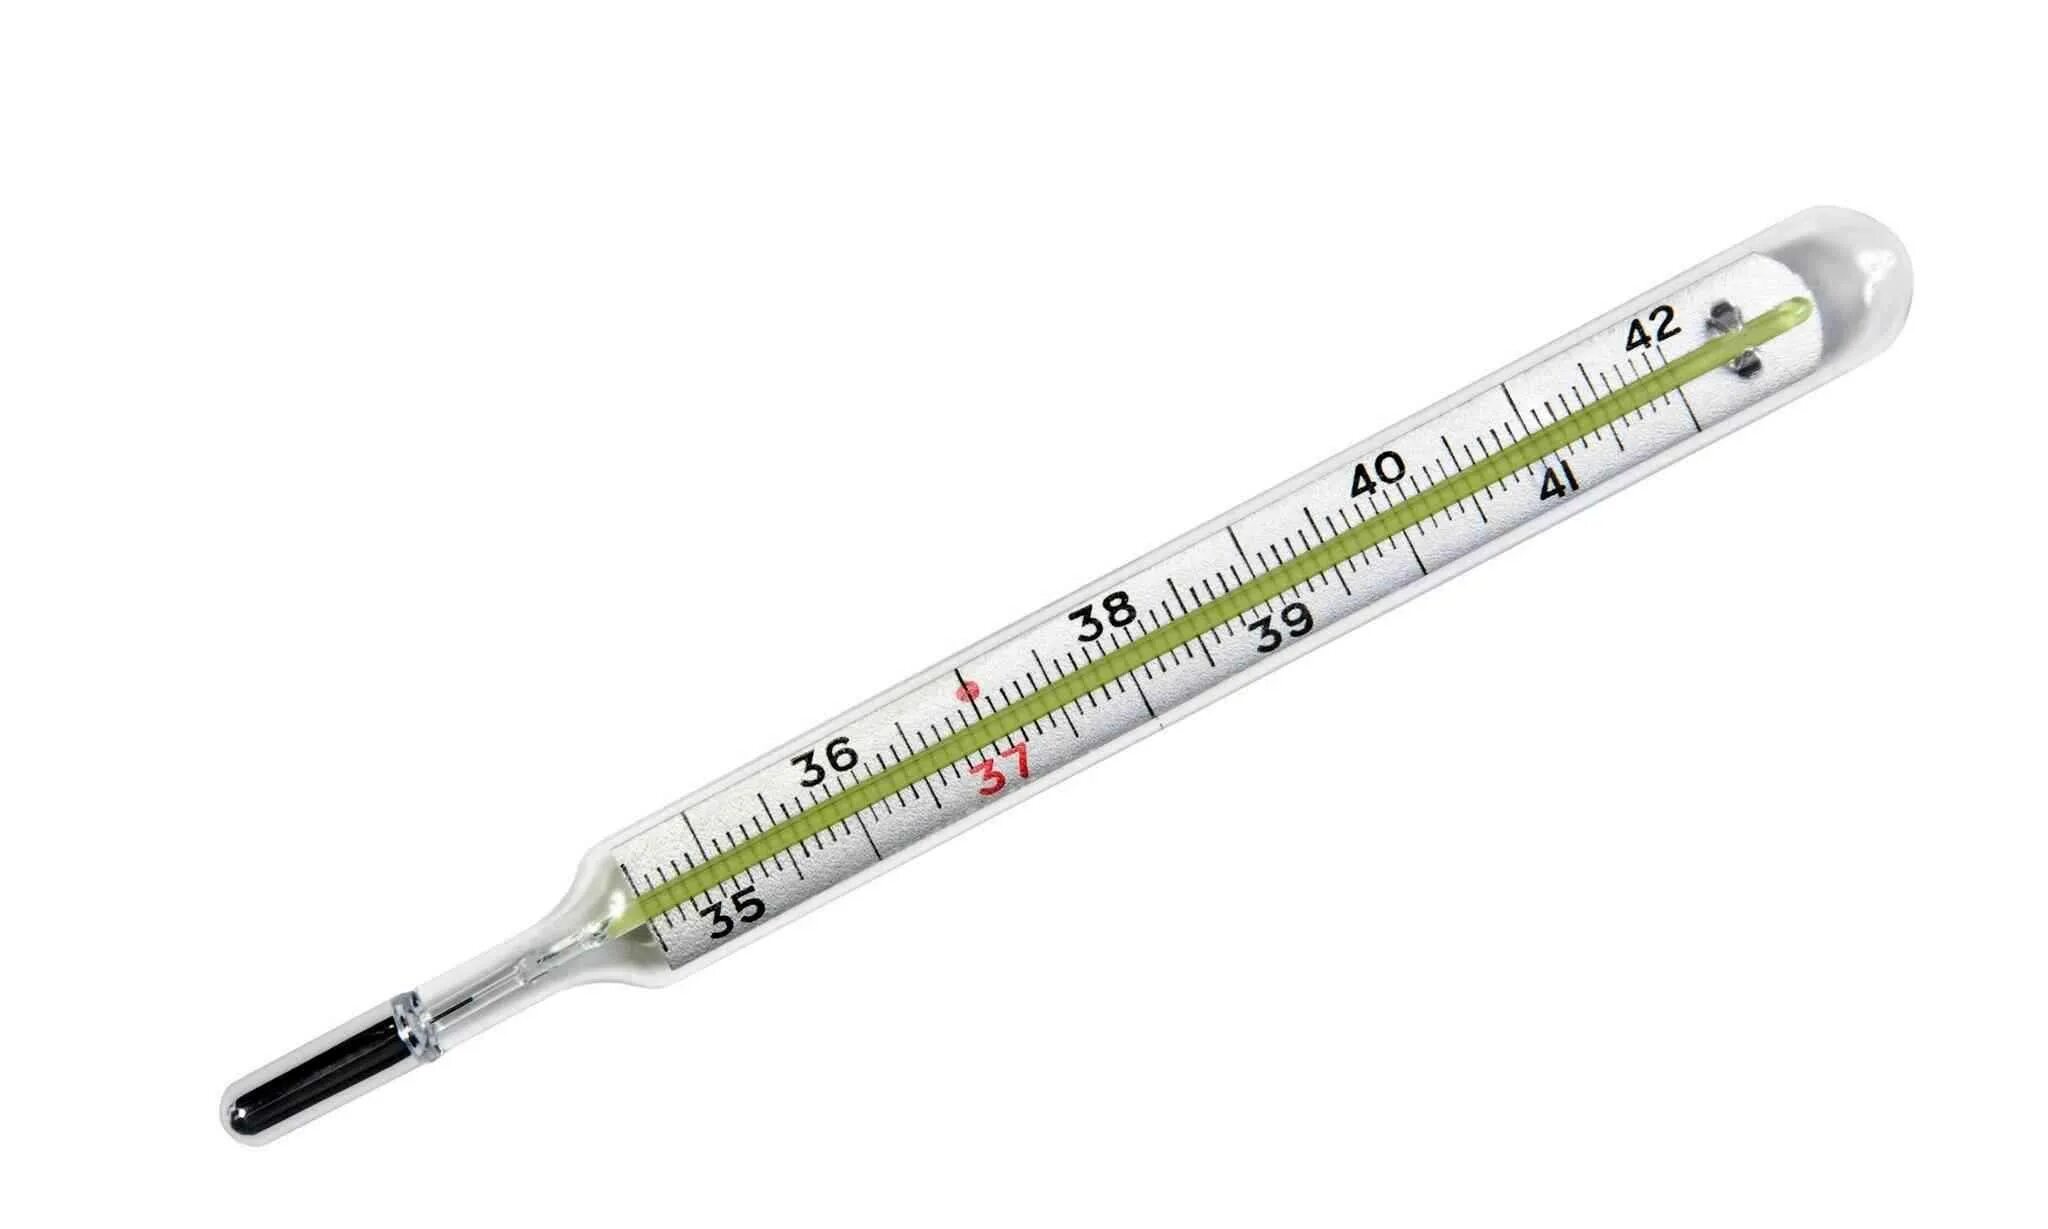 Градусник про. Термометр мед.ртутный tvy-120. Термометр медицинский ртутный модель la11. Термометр медицинский ртутный Амрус tvy-120 в футляре. Ртутный термометр (armpit Clinical Thermometer).